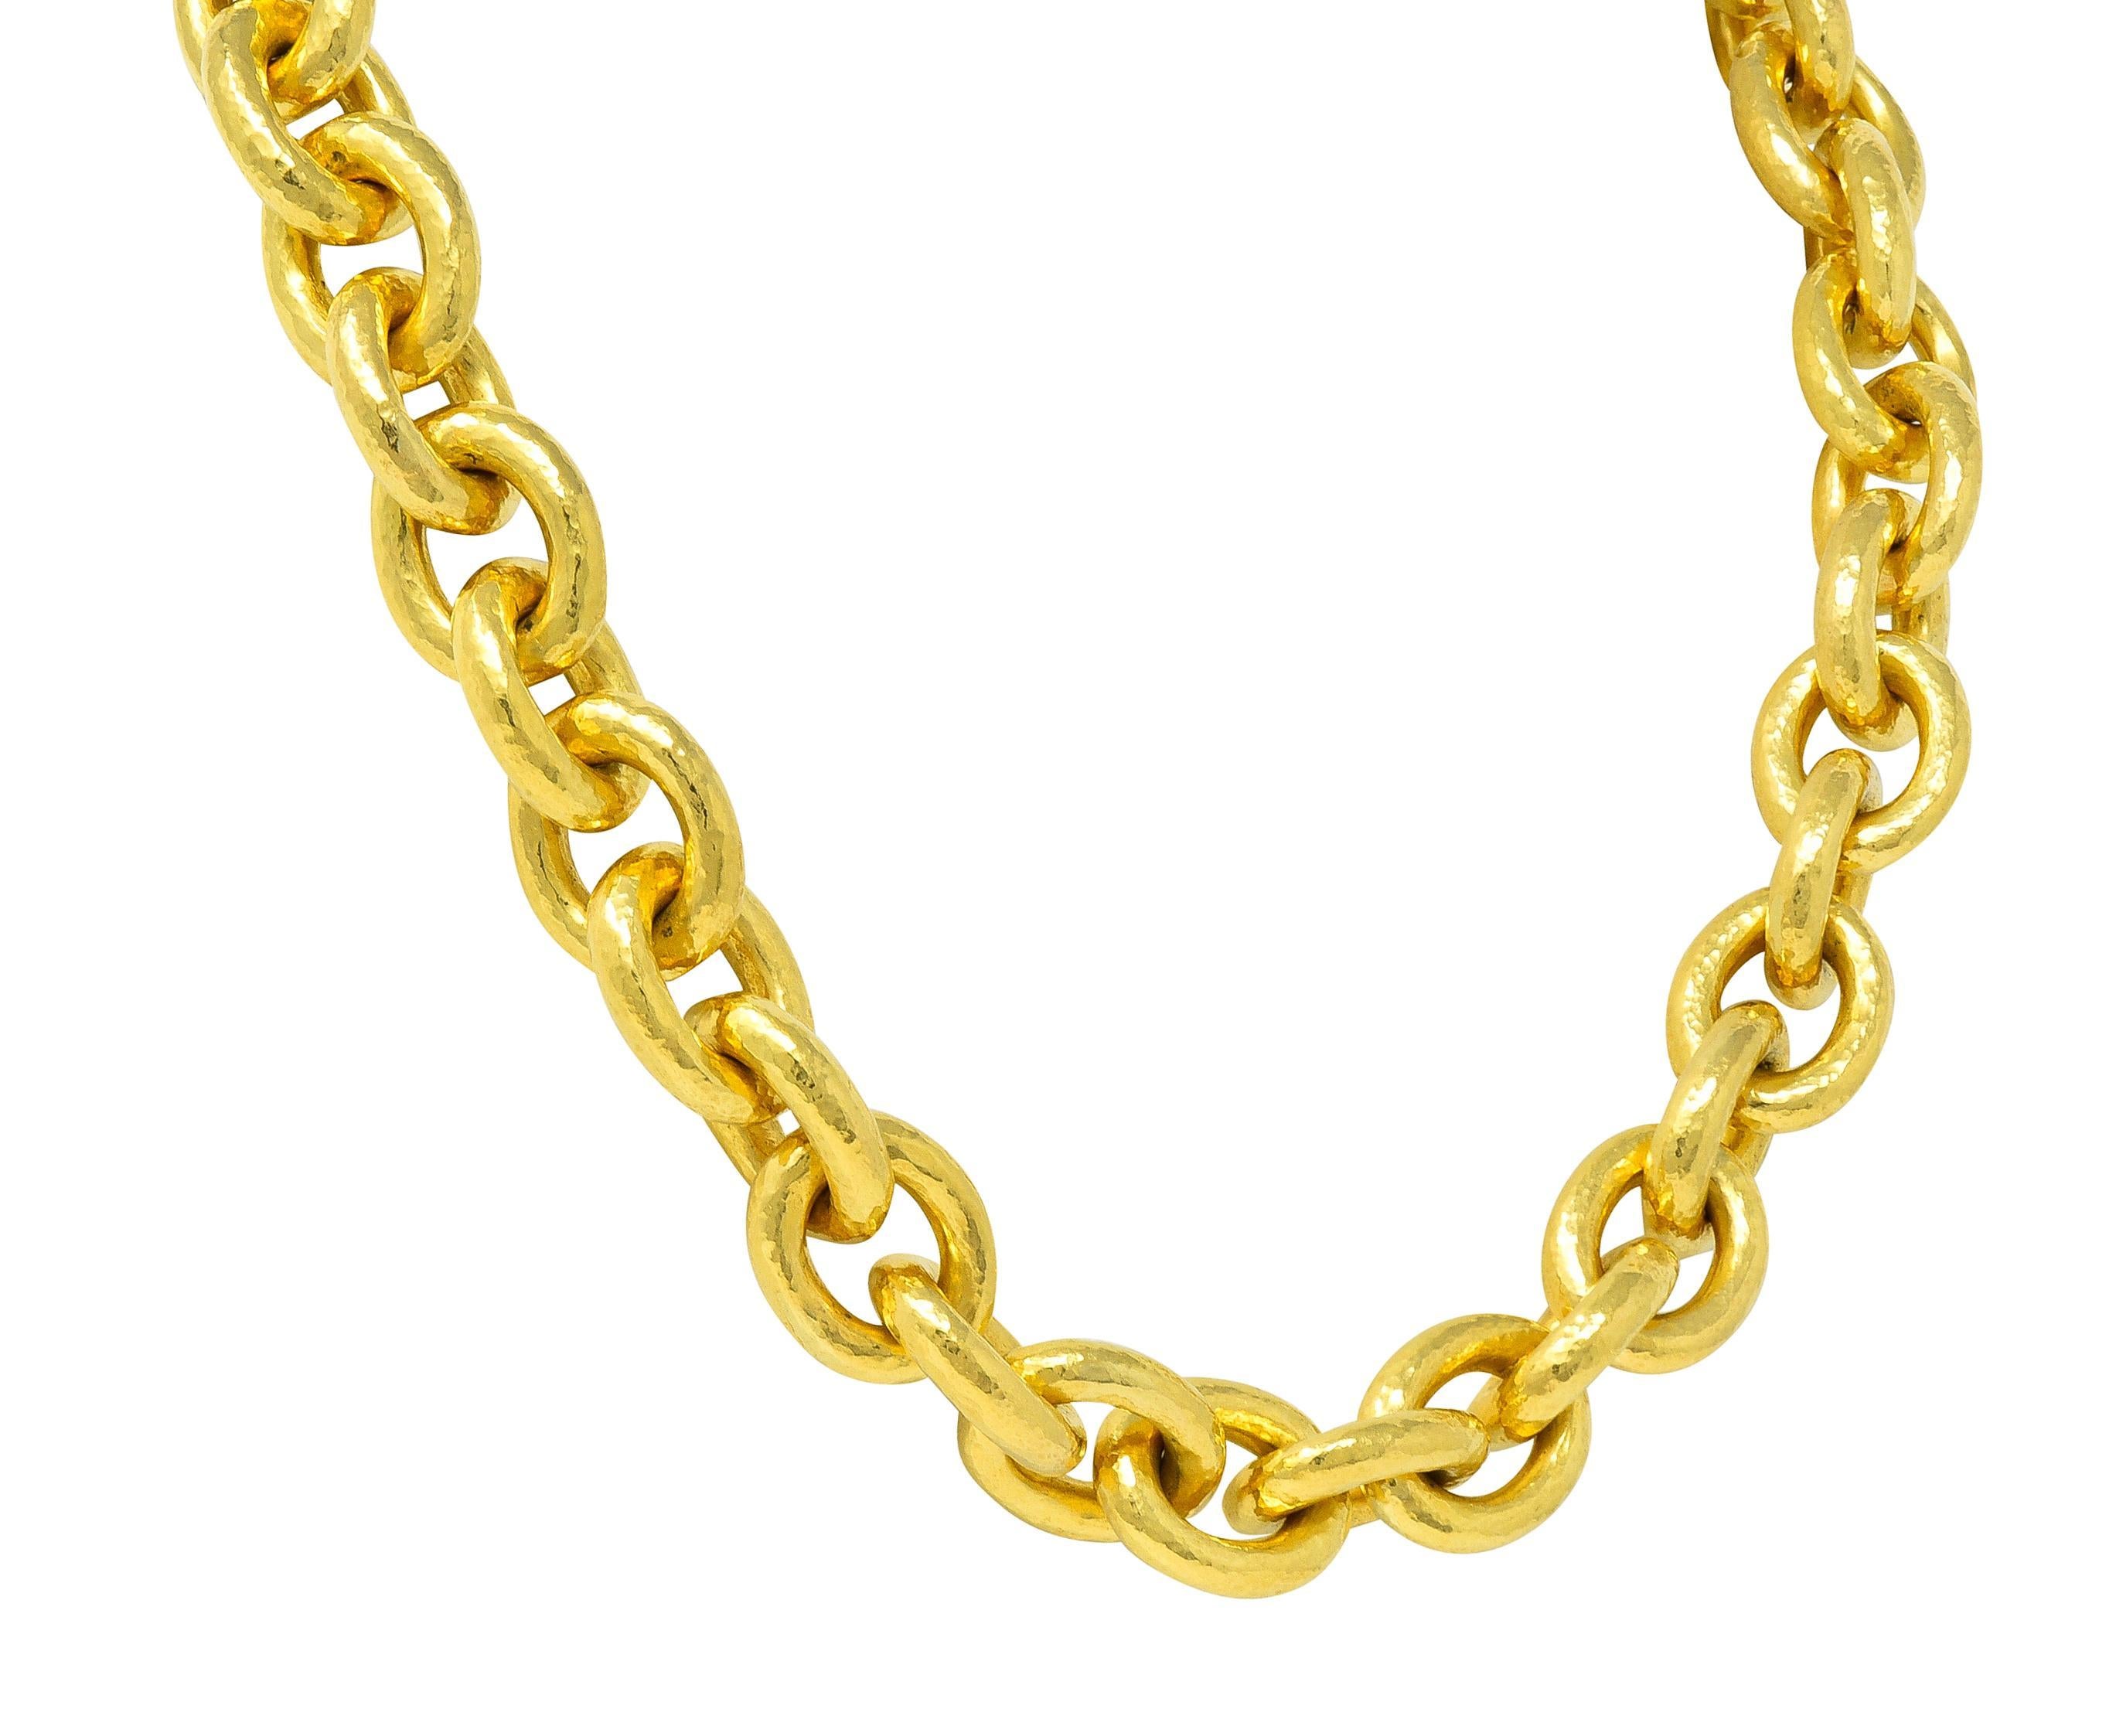 Elizabeth Locke 19 Karat Gold Hammered Cable Link Chain Vintage Necklace In Excellent Condition For Sale In Philadelphia, PA